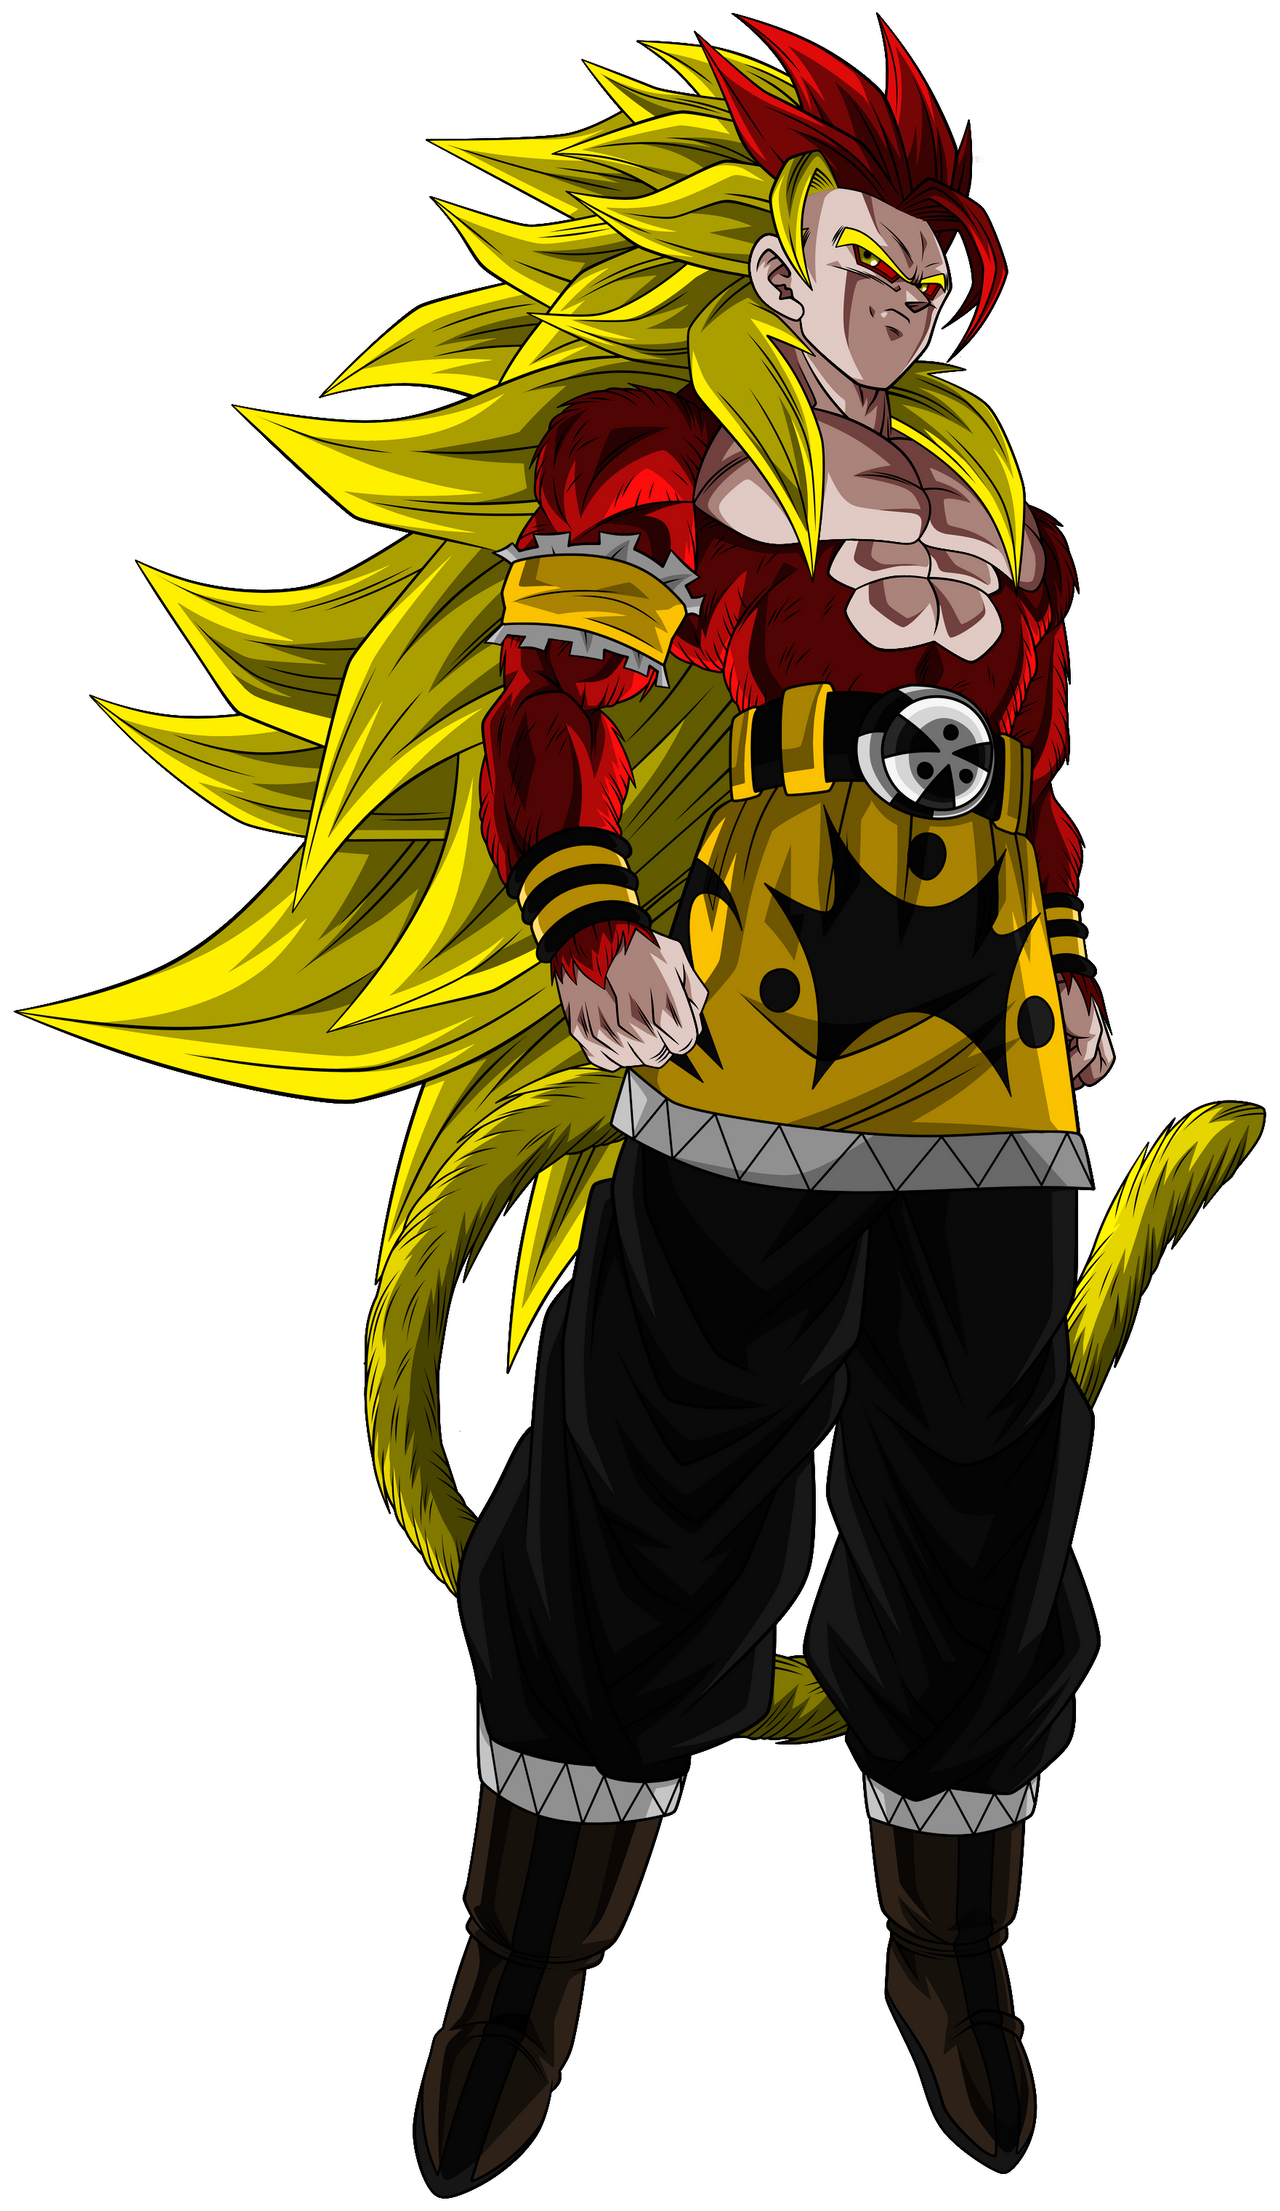 Goku Super Saiyan 5 by ChronoFz on DeviantArt  Dragon ball super artwork,  Dragon ball super manga, Anime dragon ball super